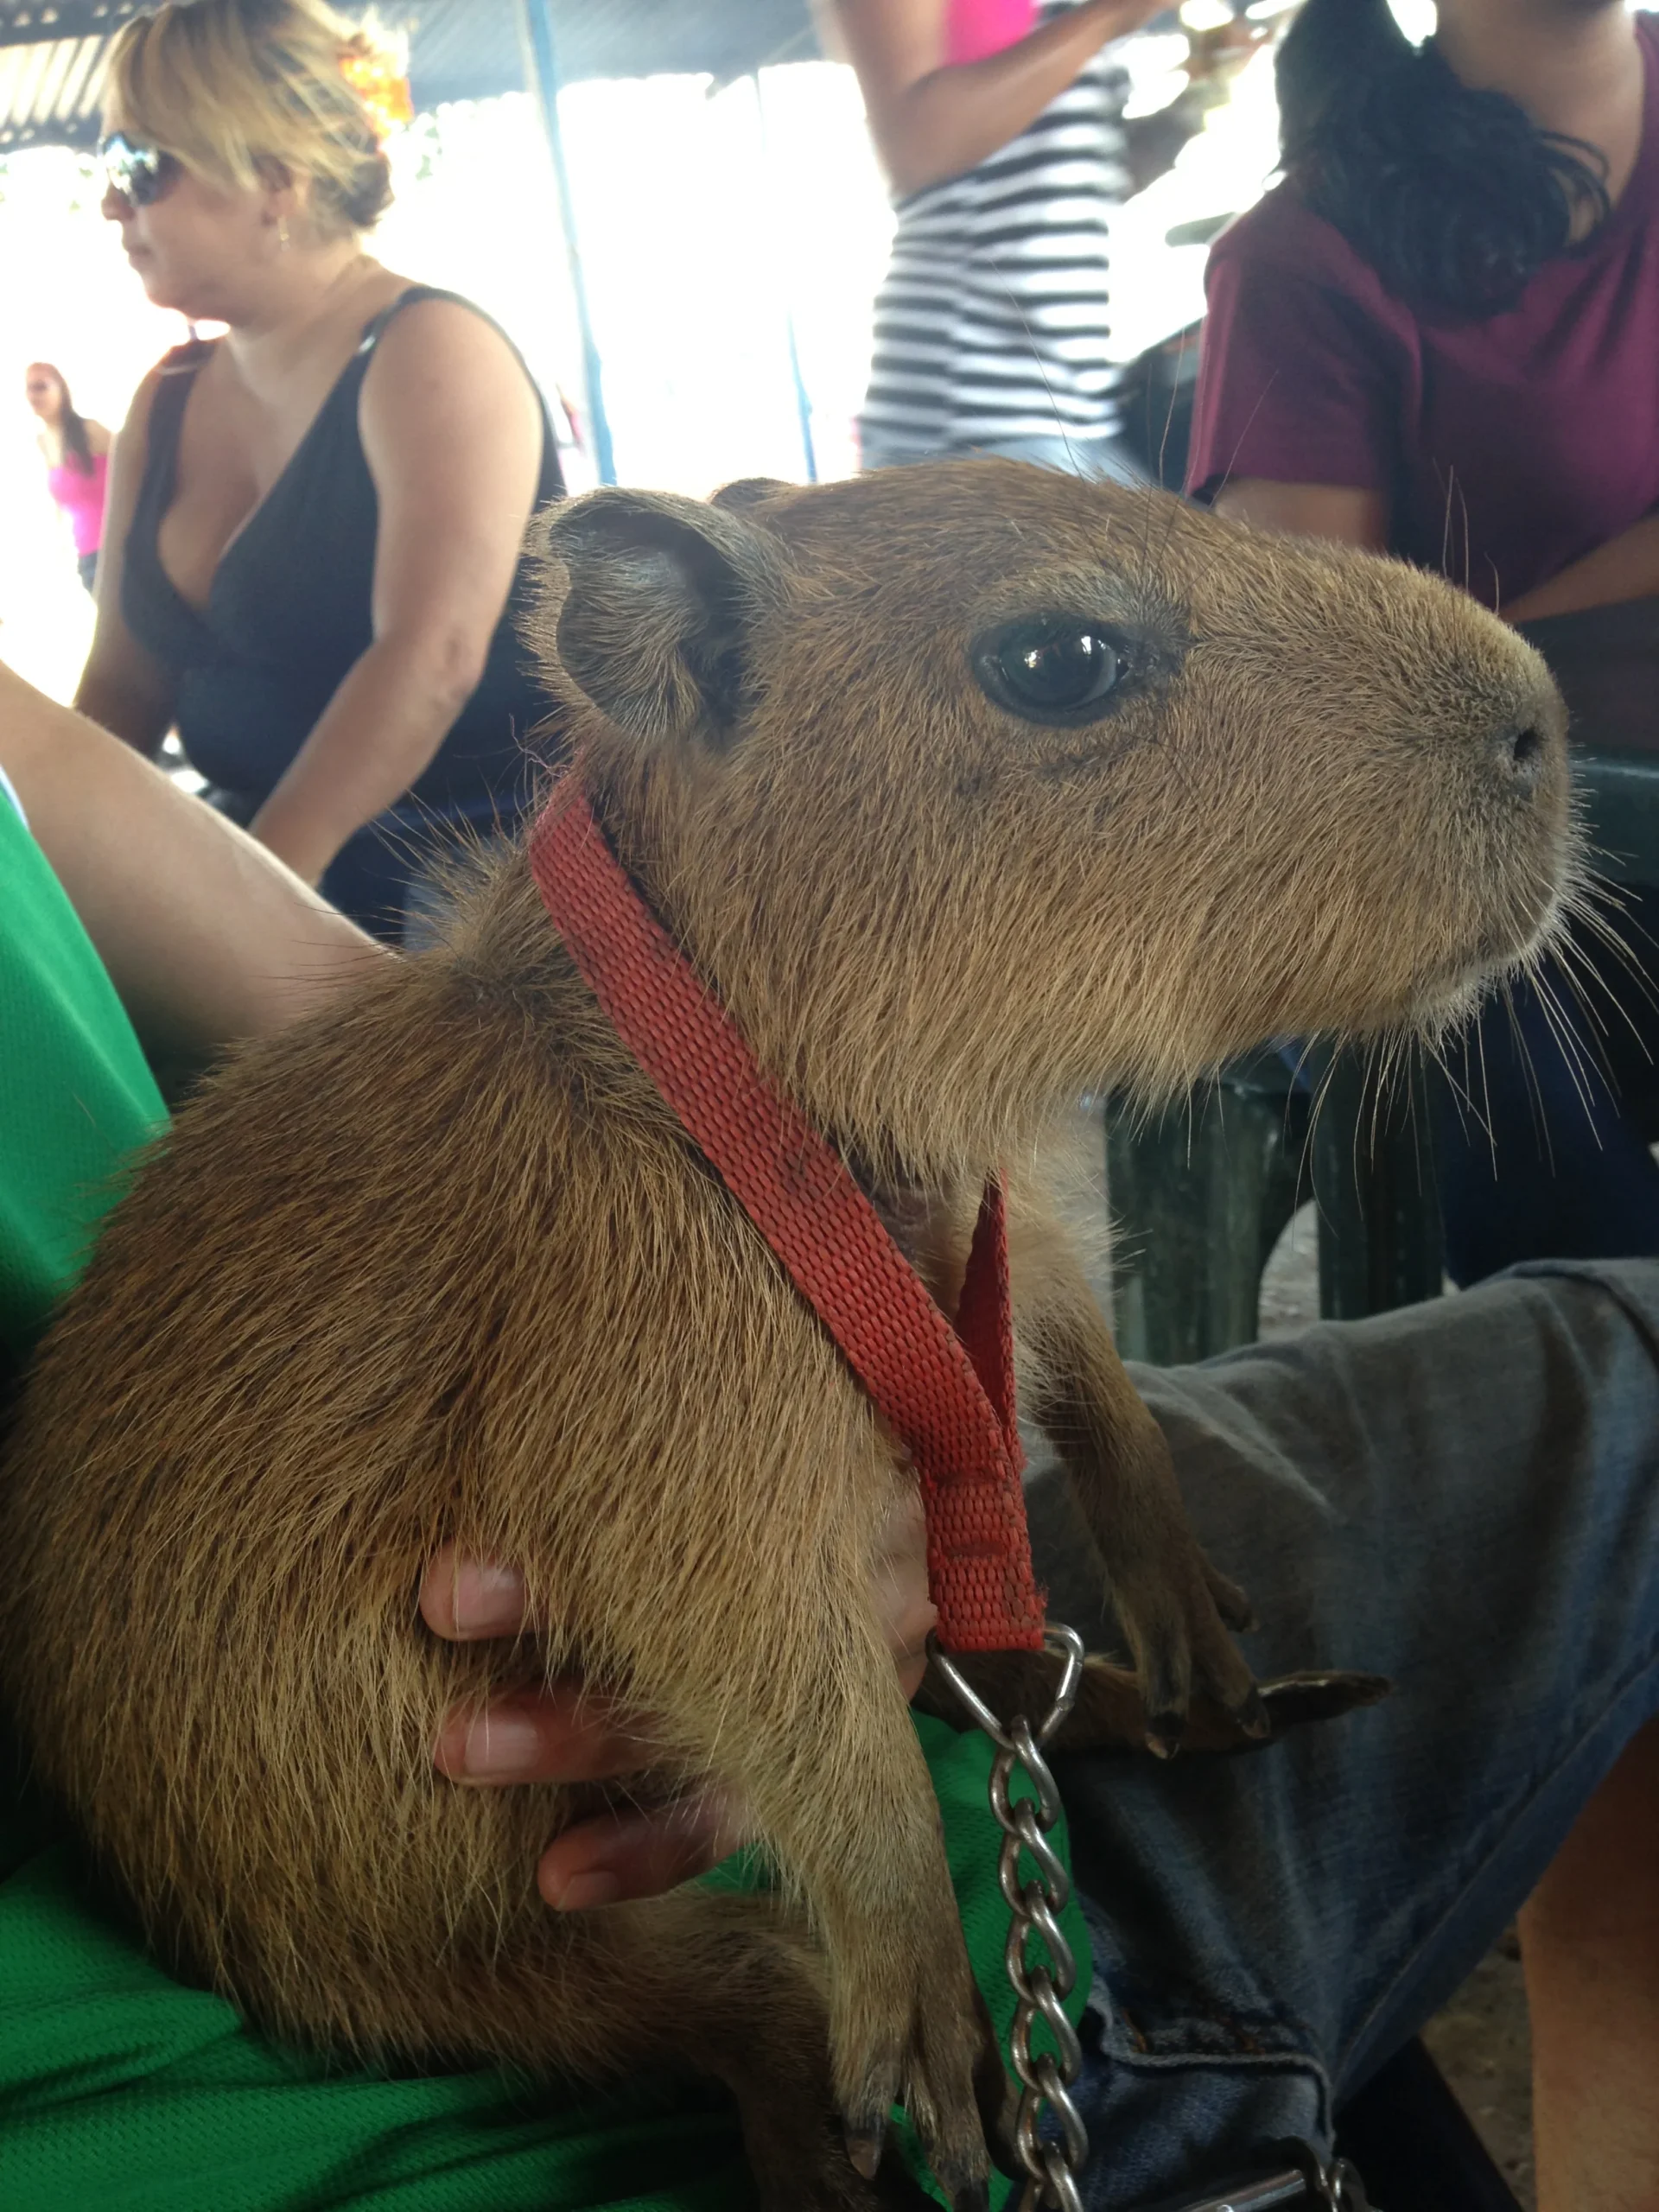 Capybara Vs Quokka